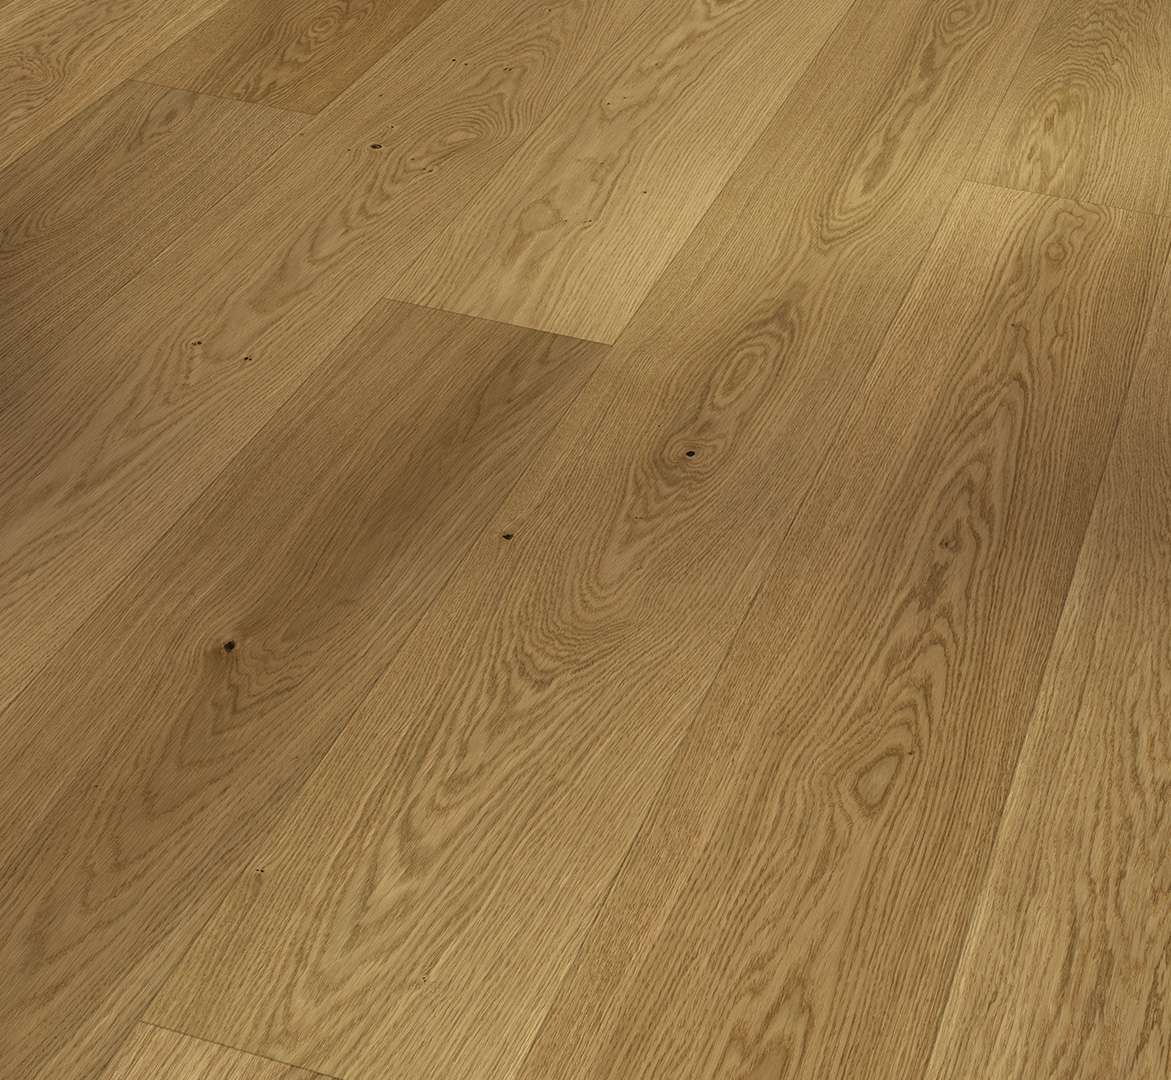 PARADOR Classic 3060 (Dub - Natur - lak) 1518124 - dřevěná třívrstvá podlaha